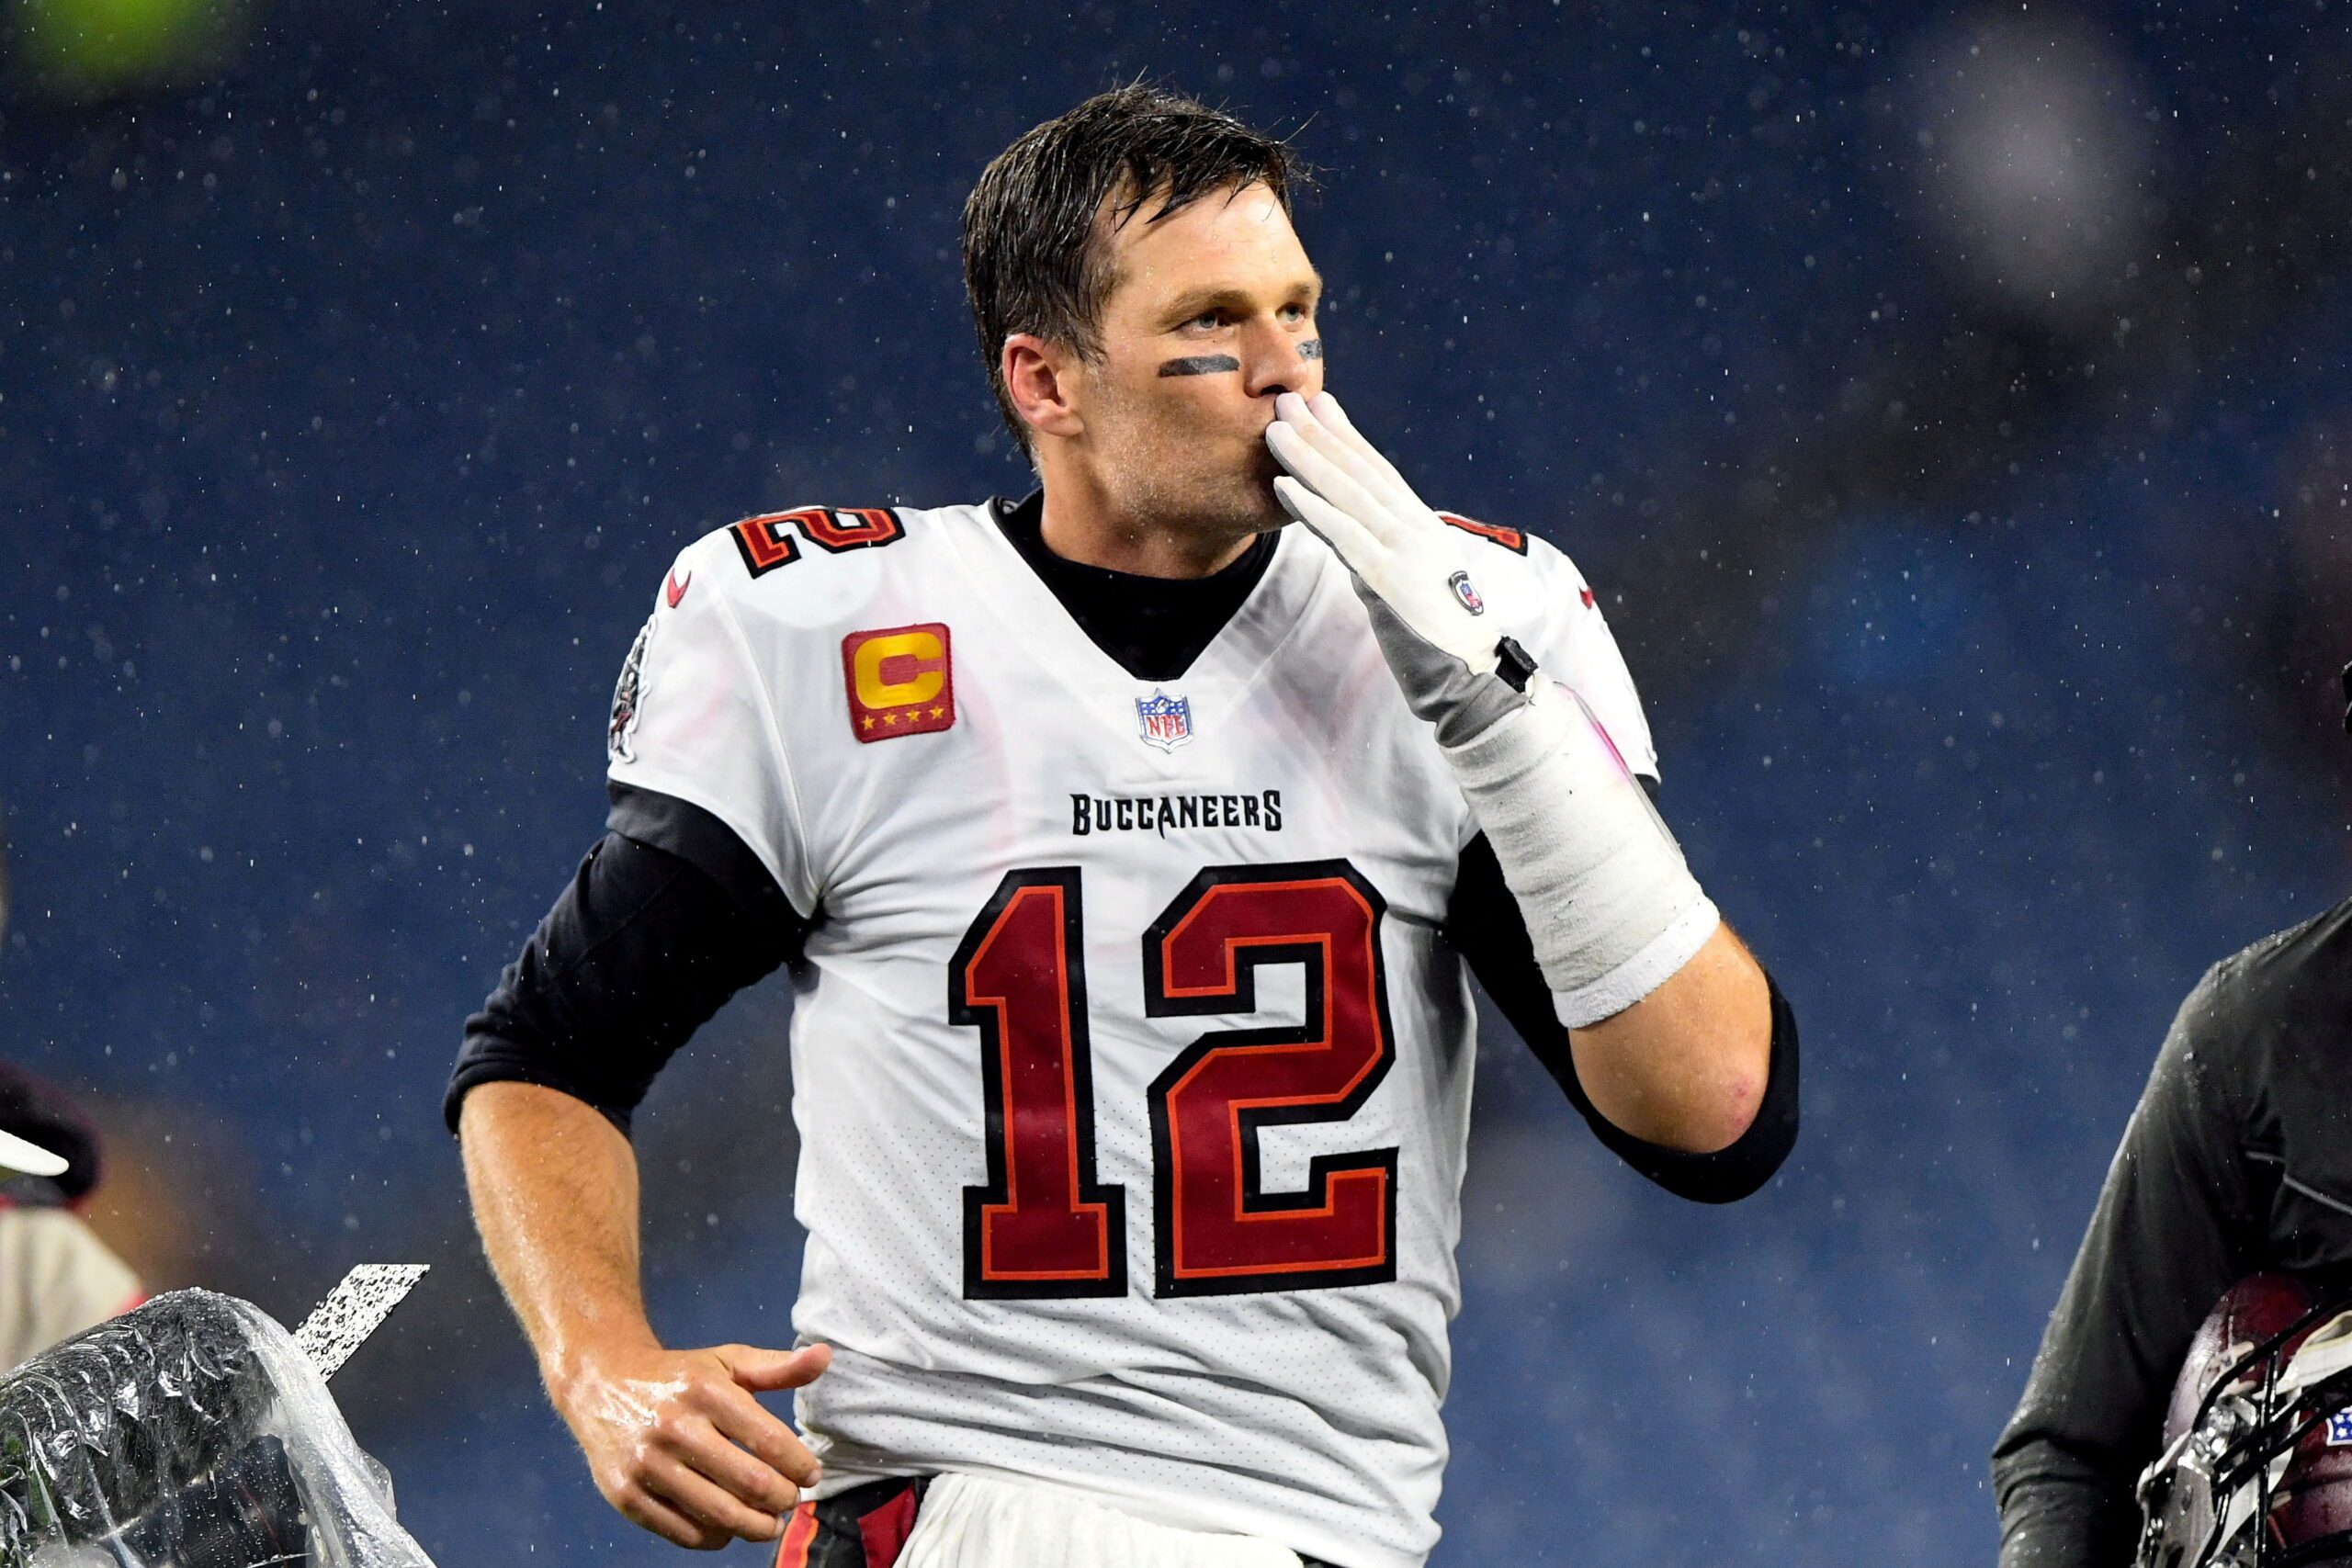 Tom Brady on retirement rumors: ‘Still going through the process’